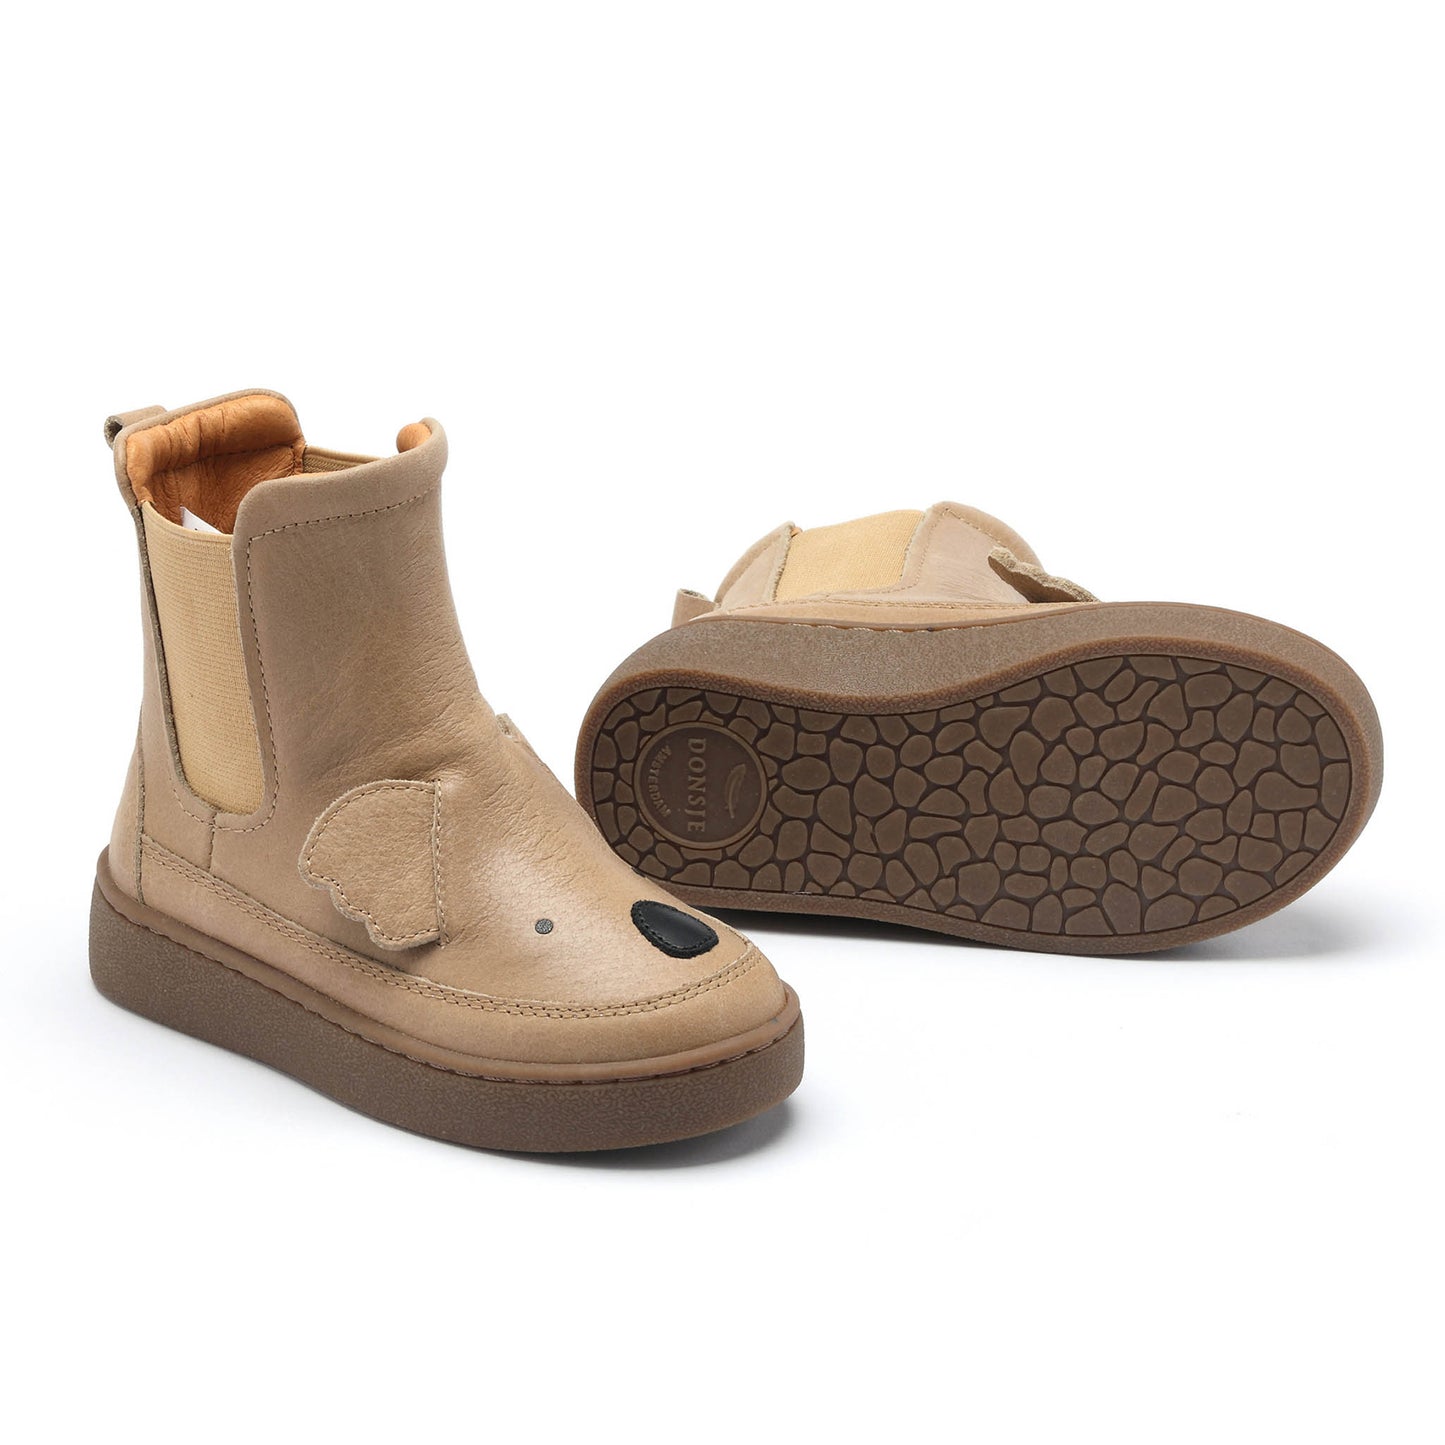 Donsje - Schuhe / Stiefel / Chelsea Boots "Thuru Classic  Koala" | truffle leather - Leja Concept Store